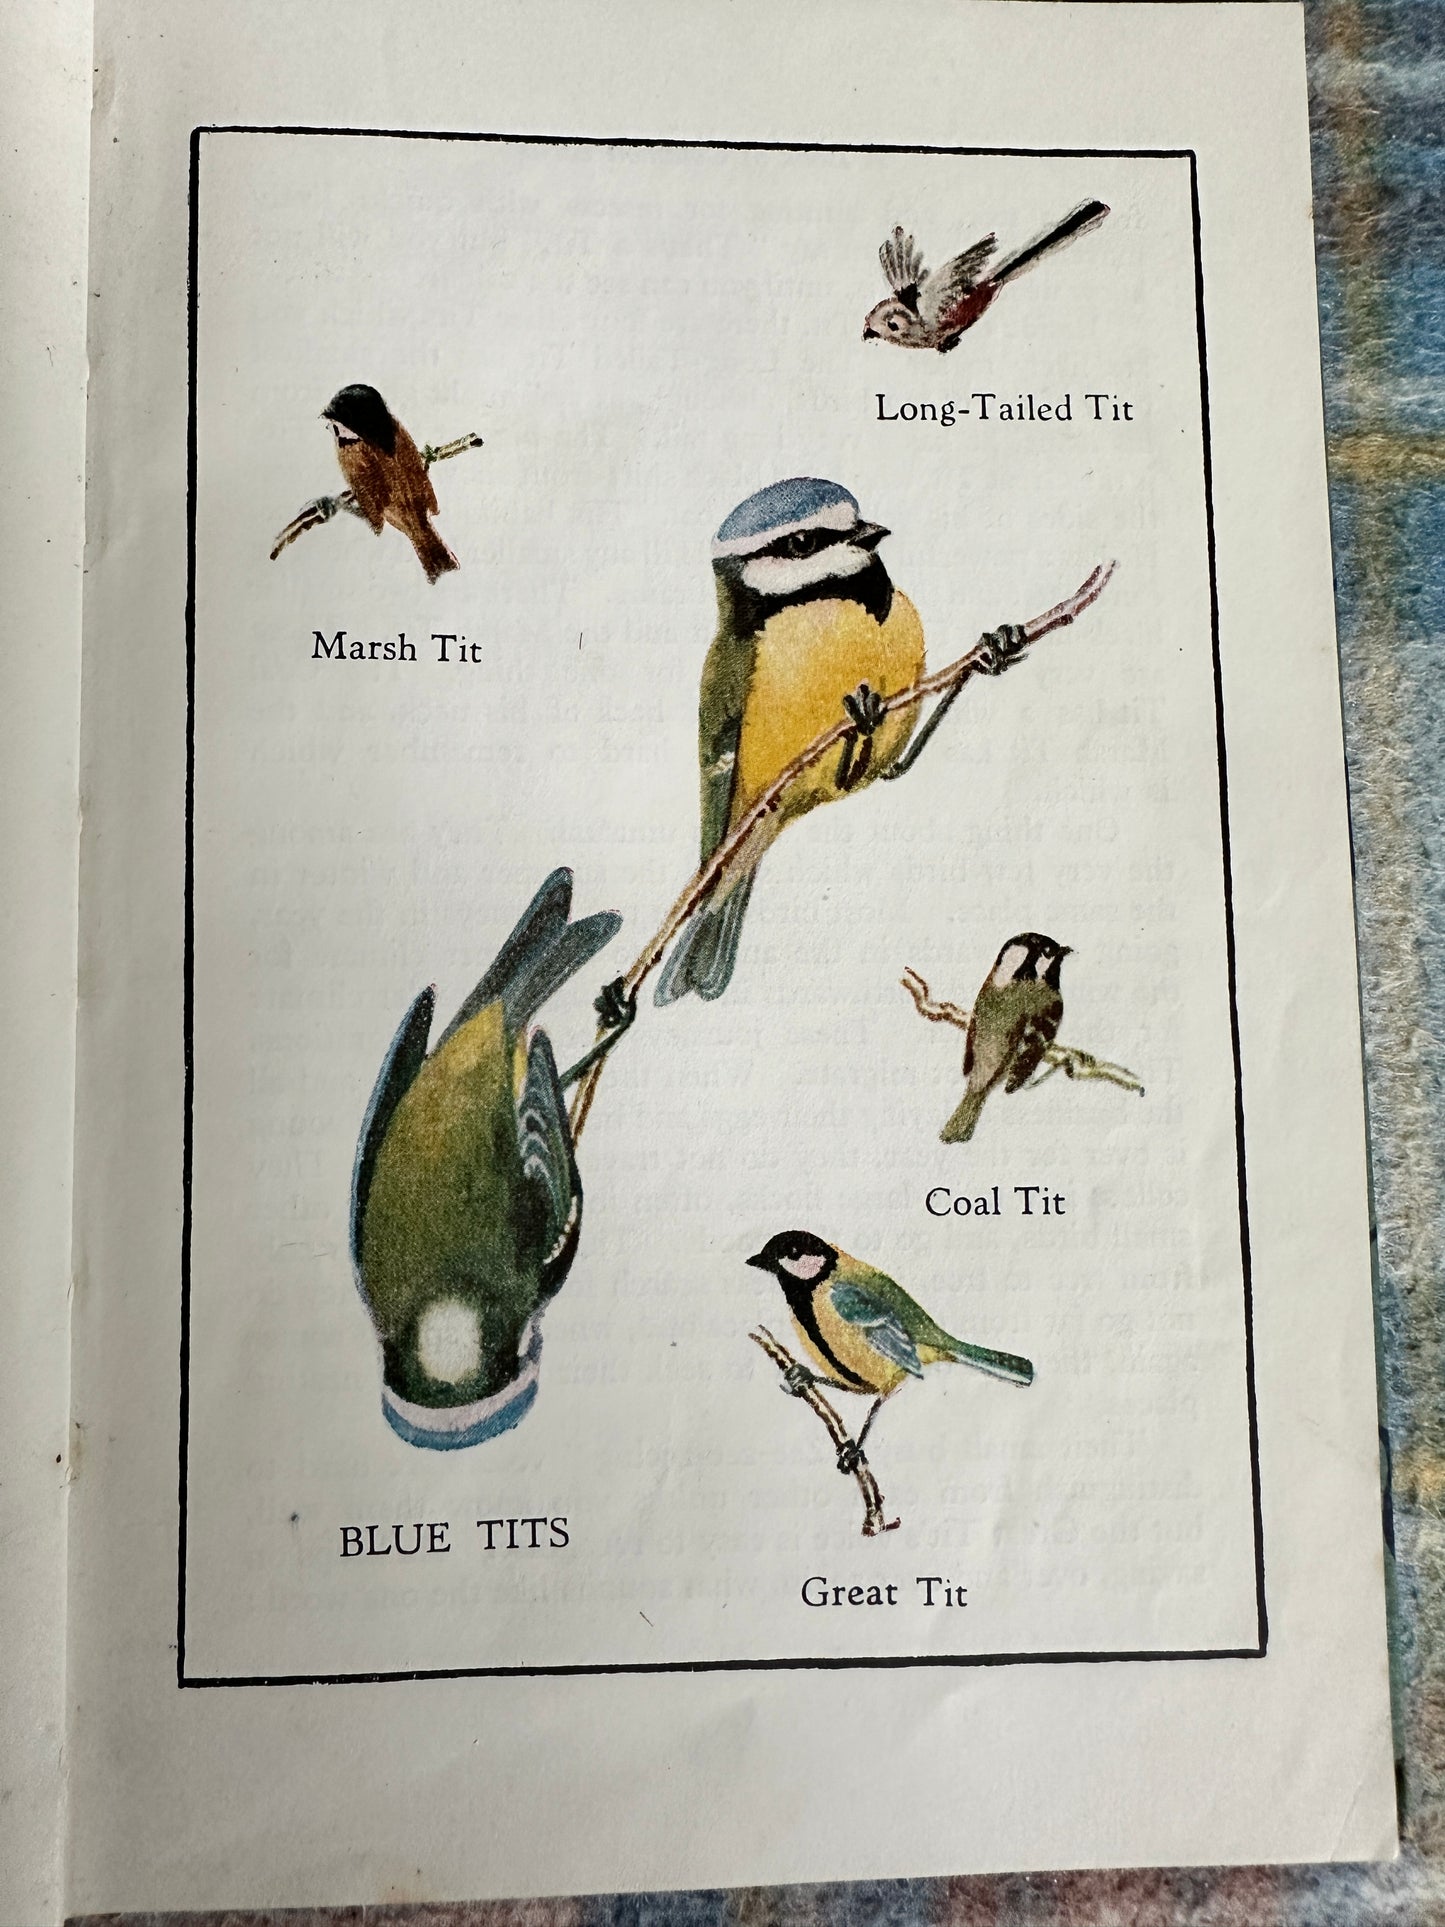 1940*1st* A Book Of Common Birds - Edmund Sandars (Chameleon Books) Oxford University Press